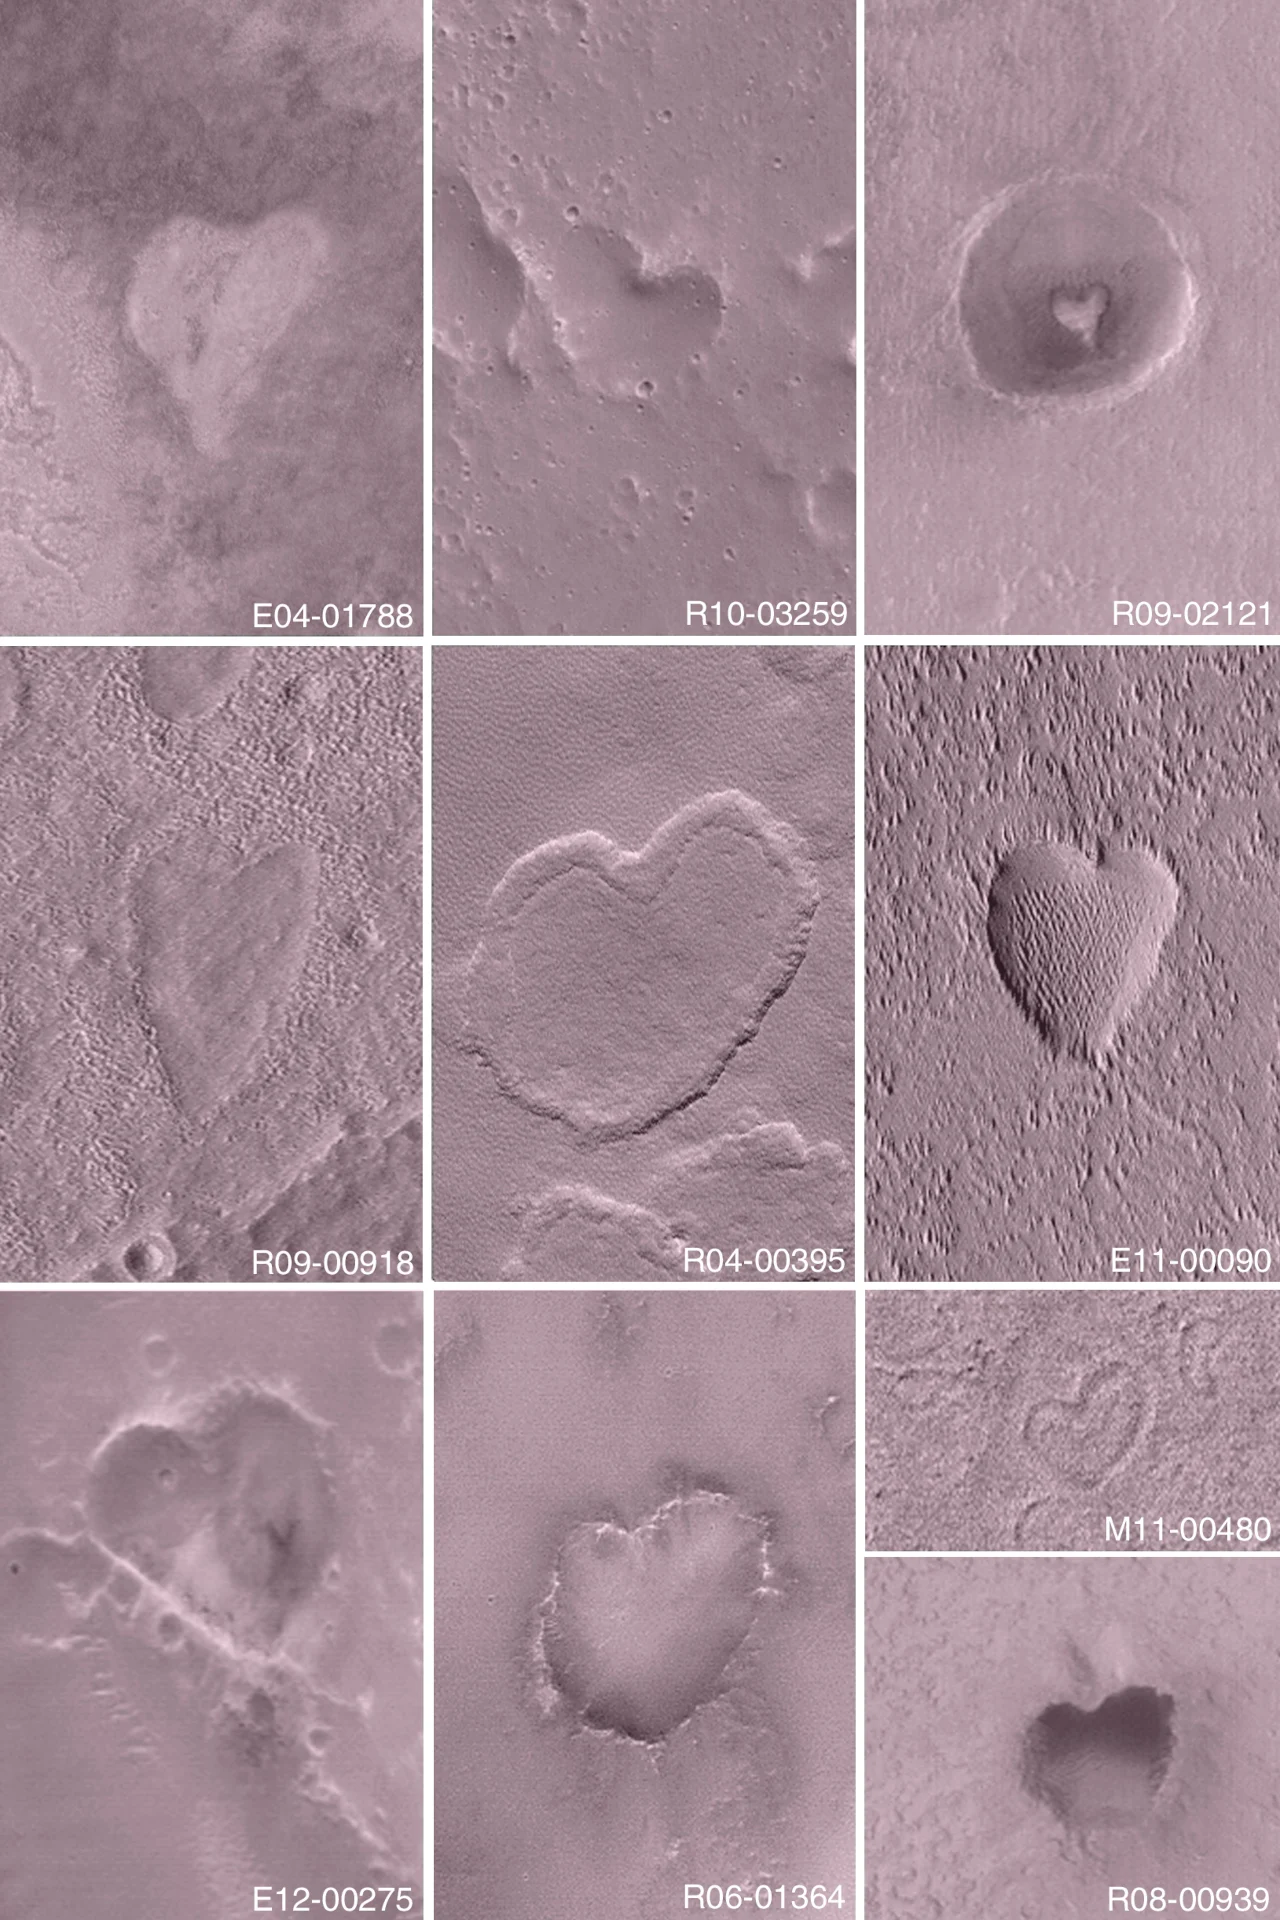 Hearts-of-Mars-collage-NASA-MGS-PIA05296